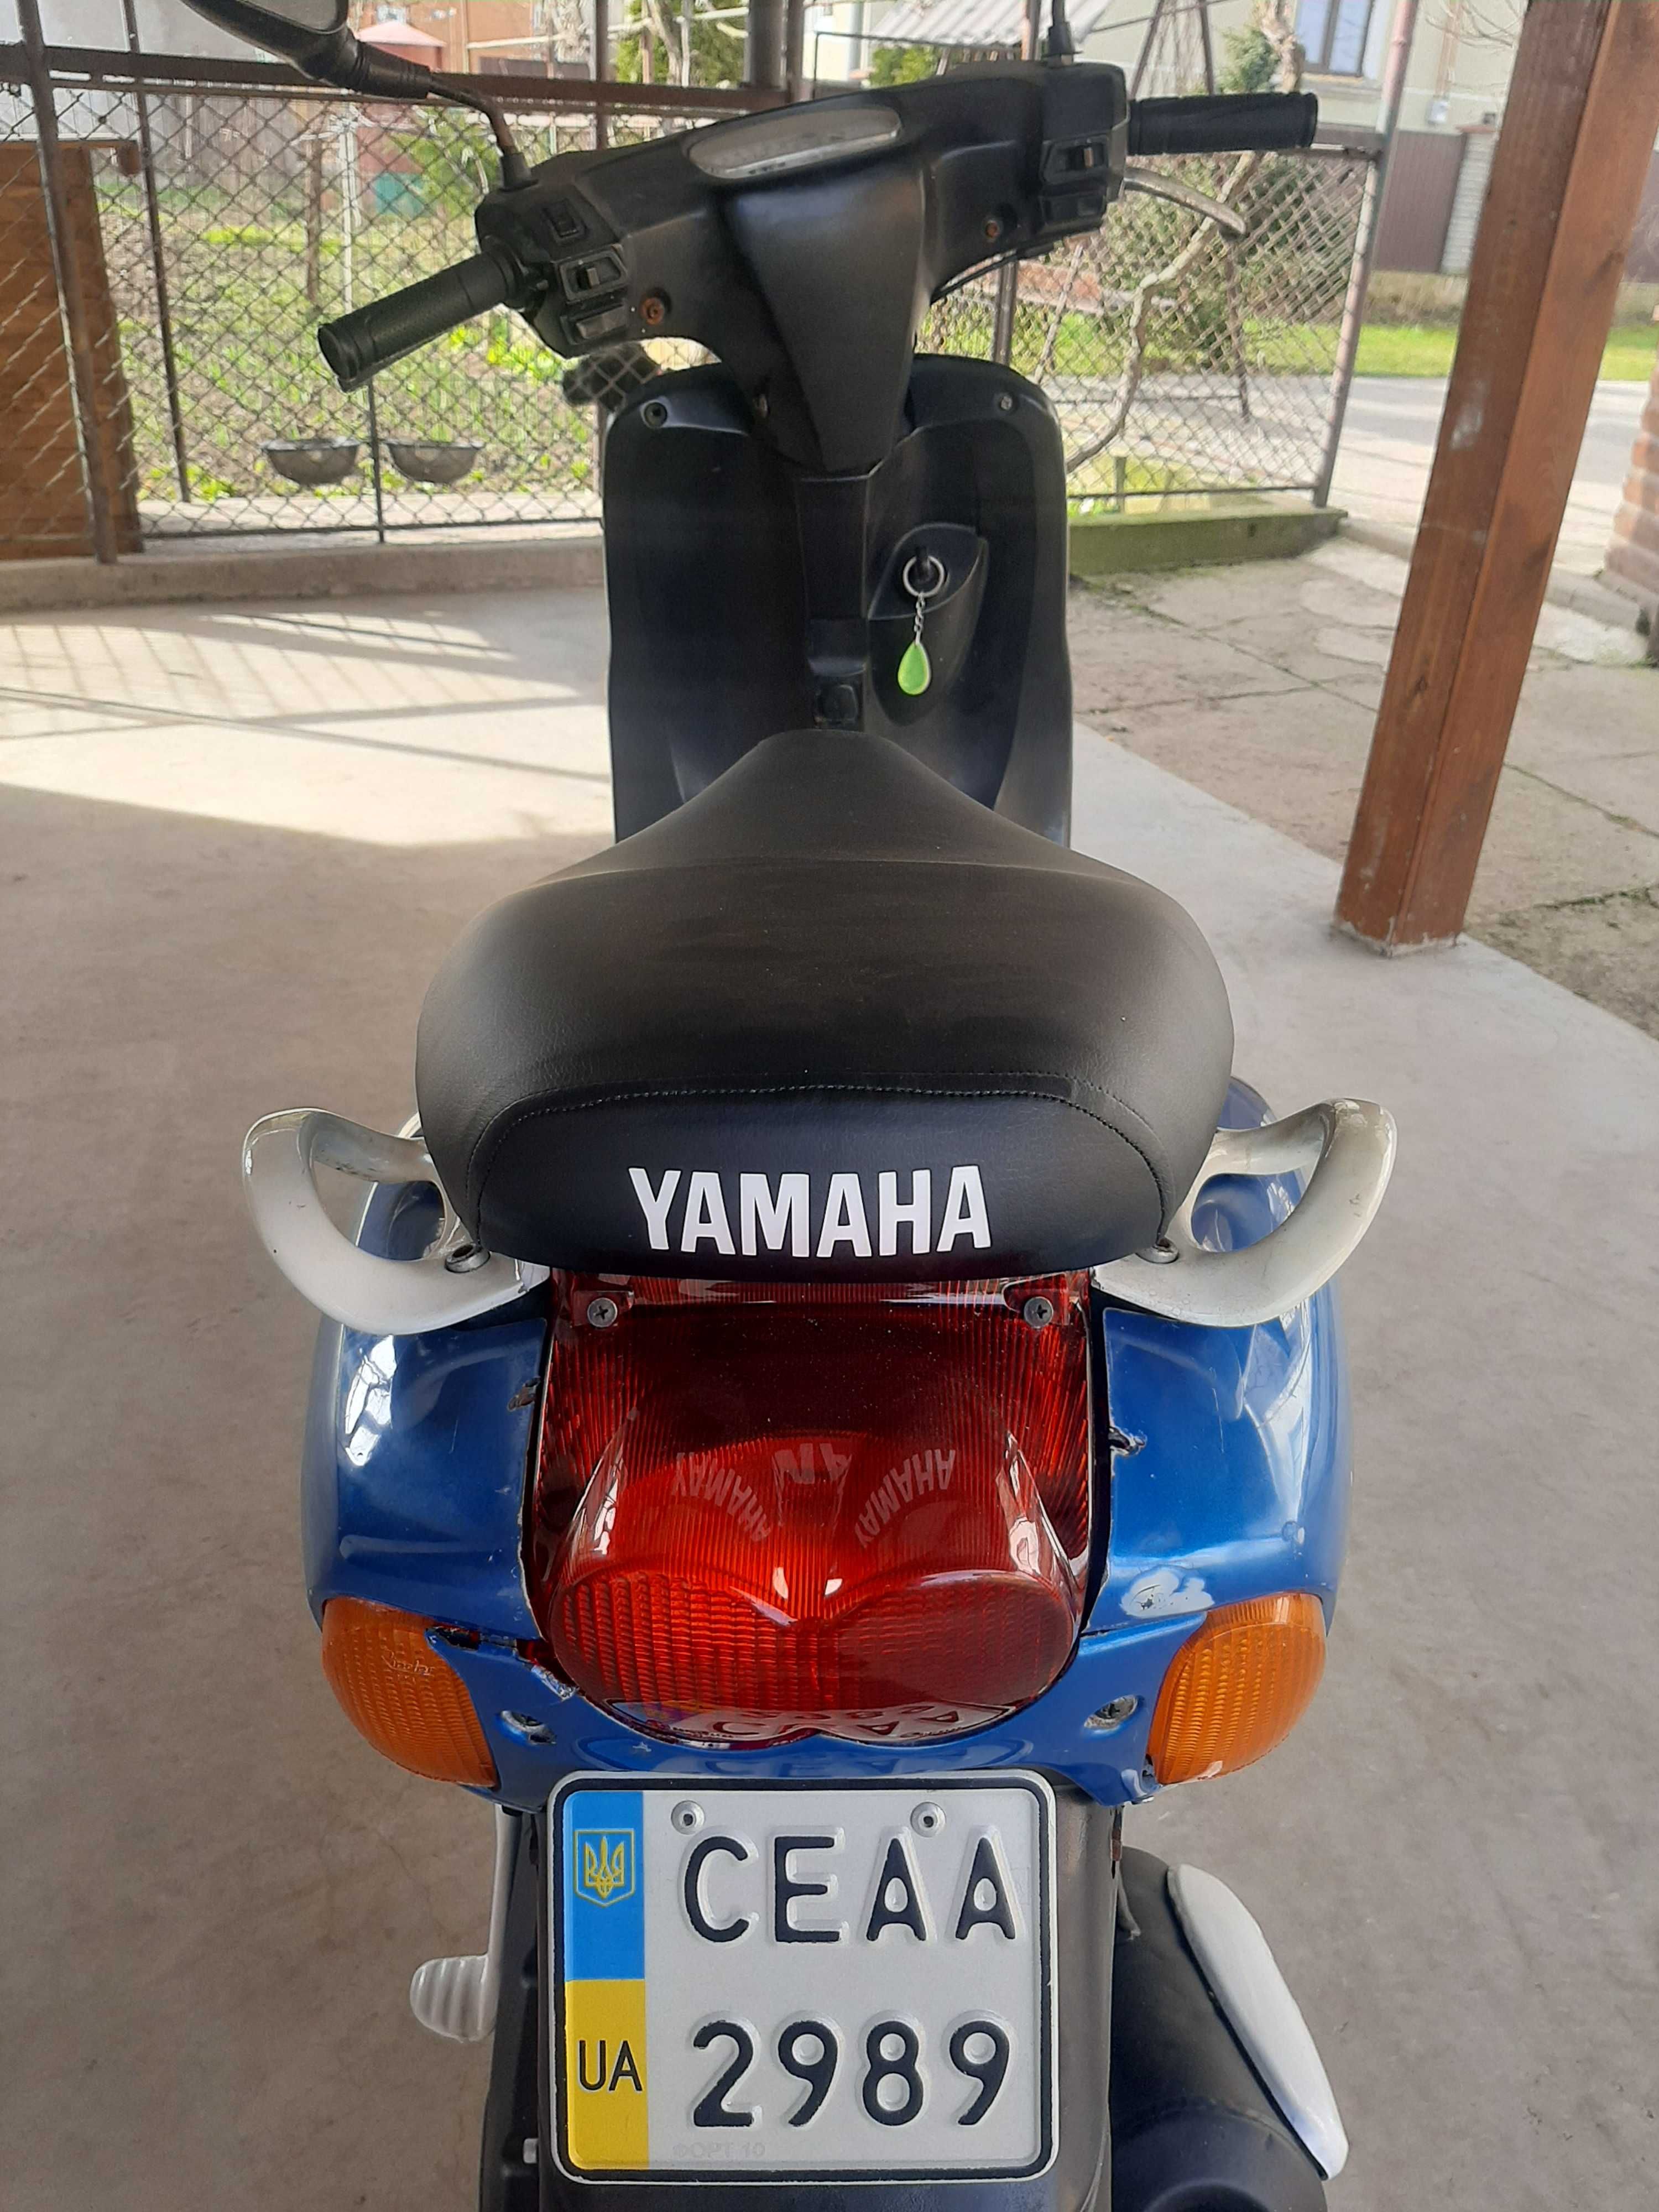 Yamaha neos 50cc